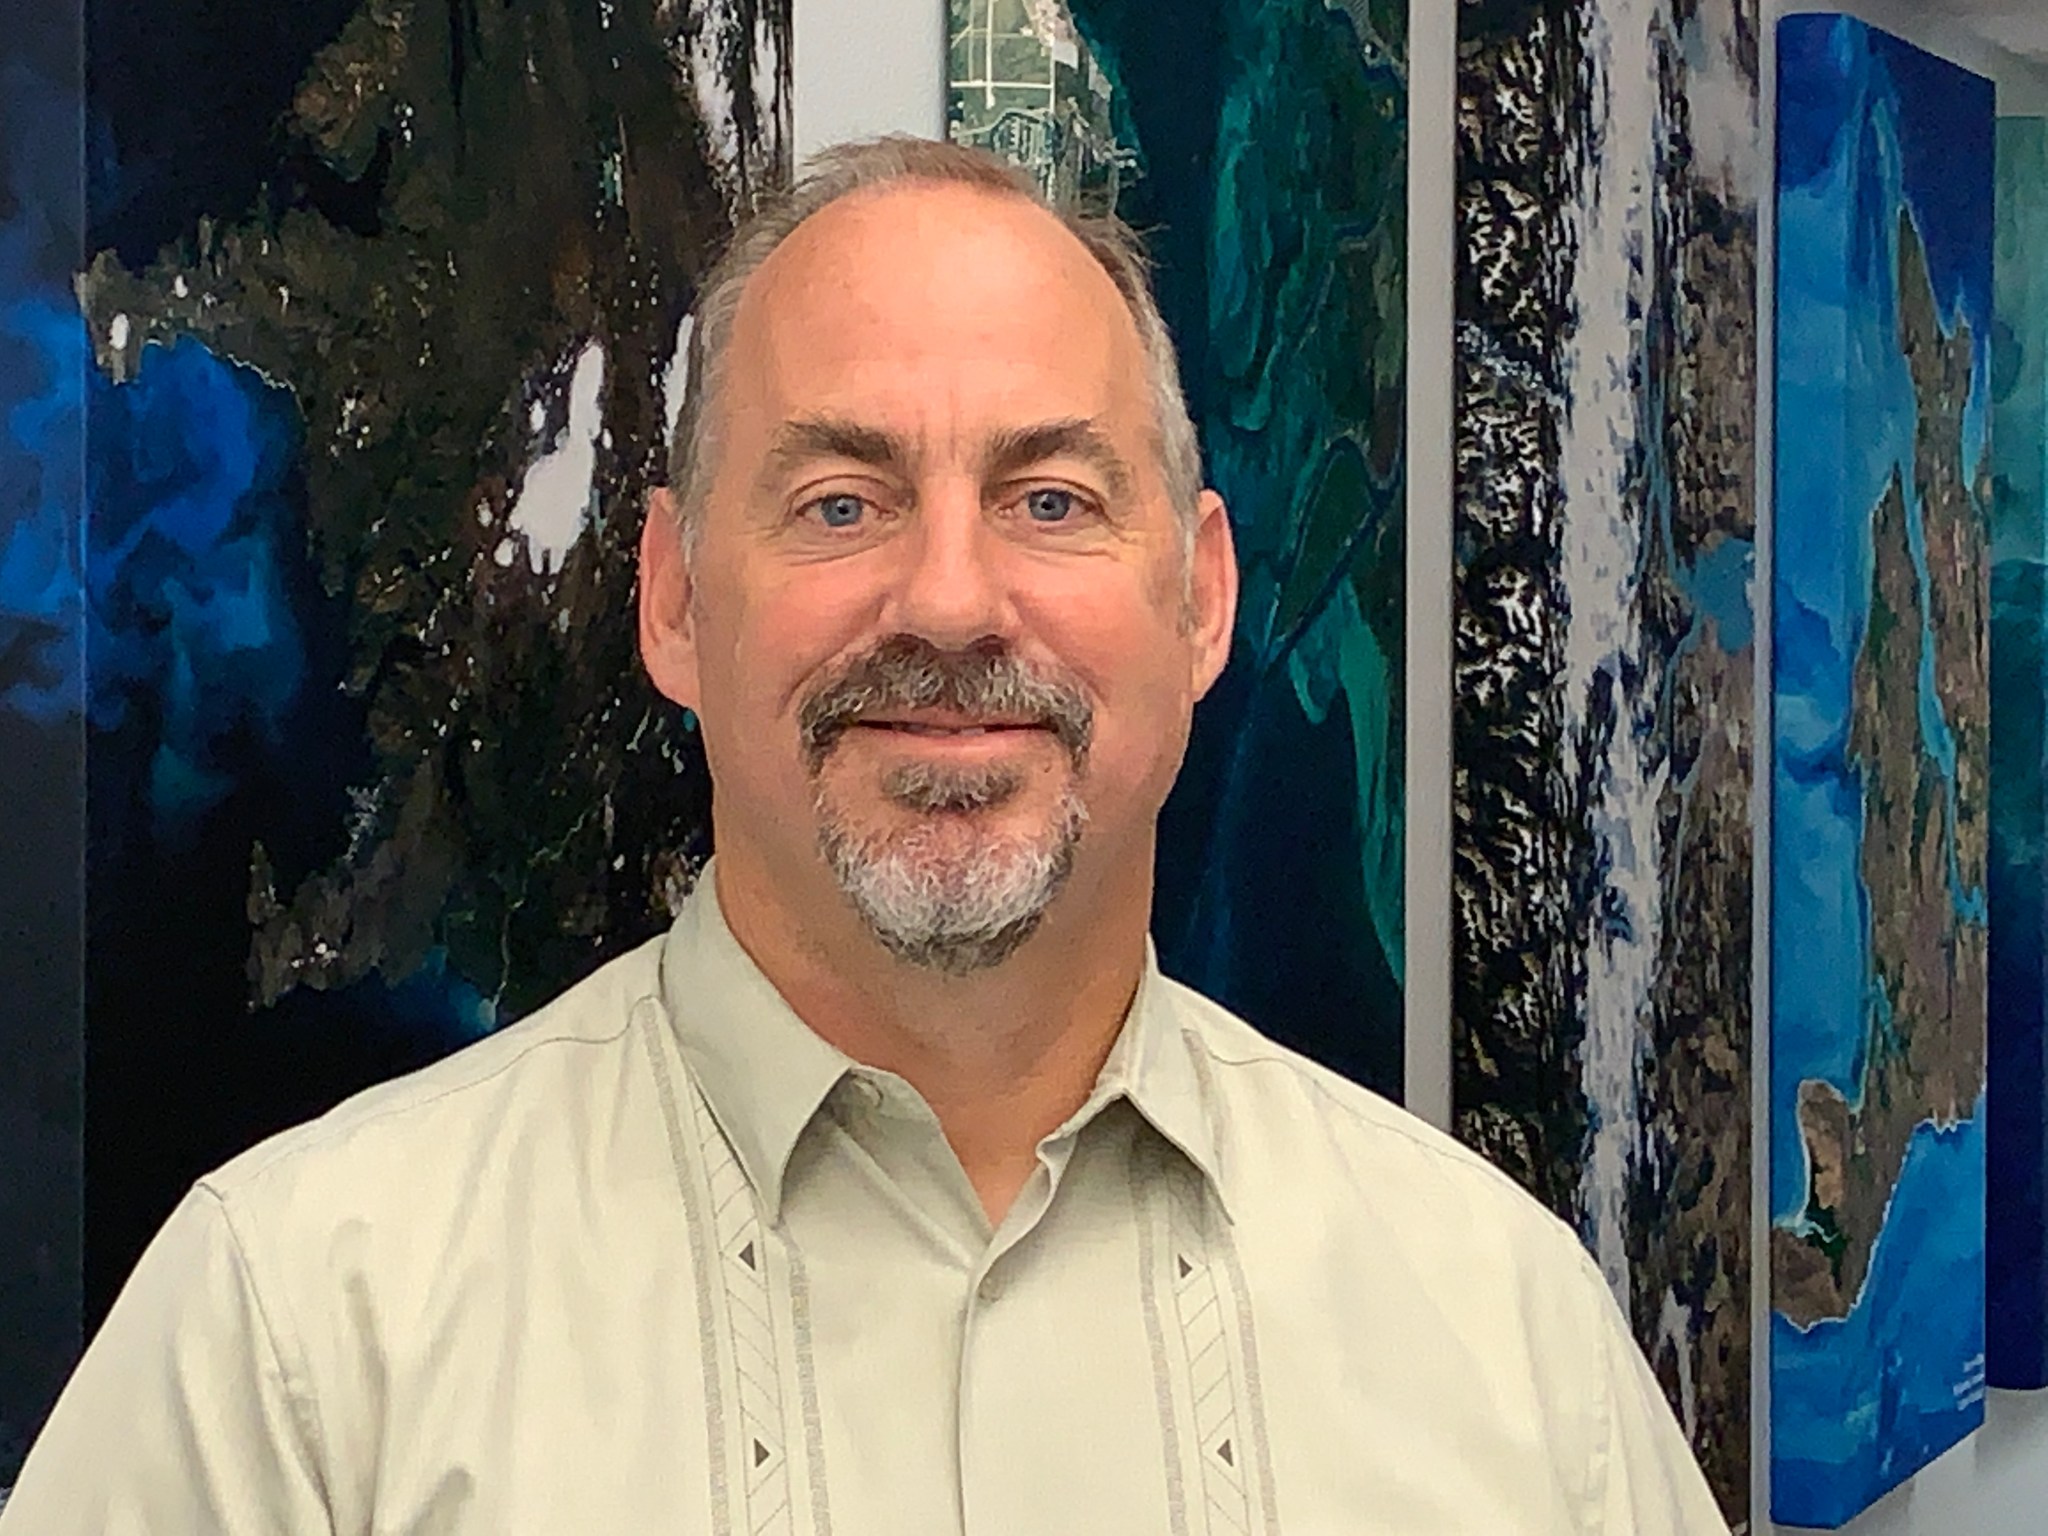 Mark Mertz is a senior launch site integration manager for NASA’s Launch Services Program.